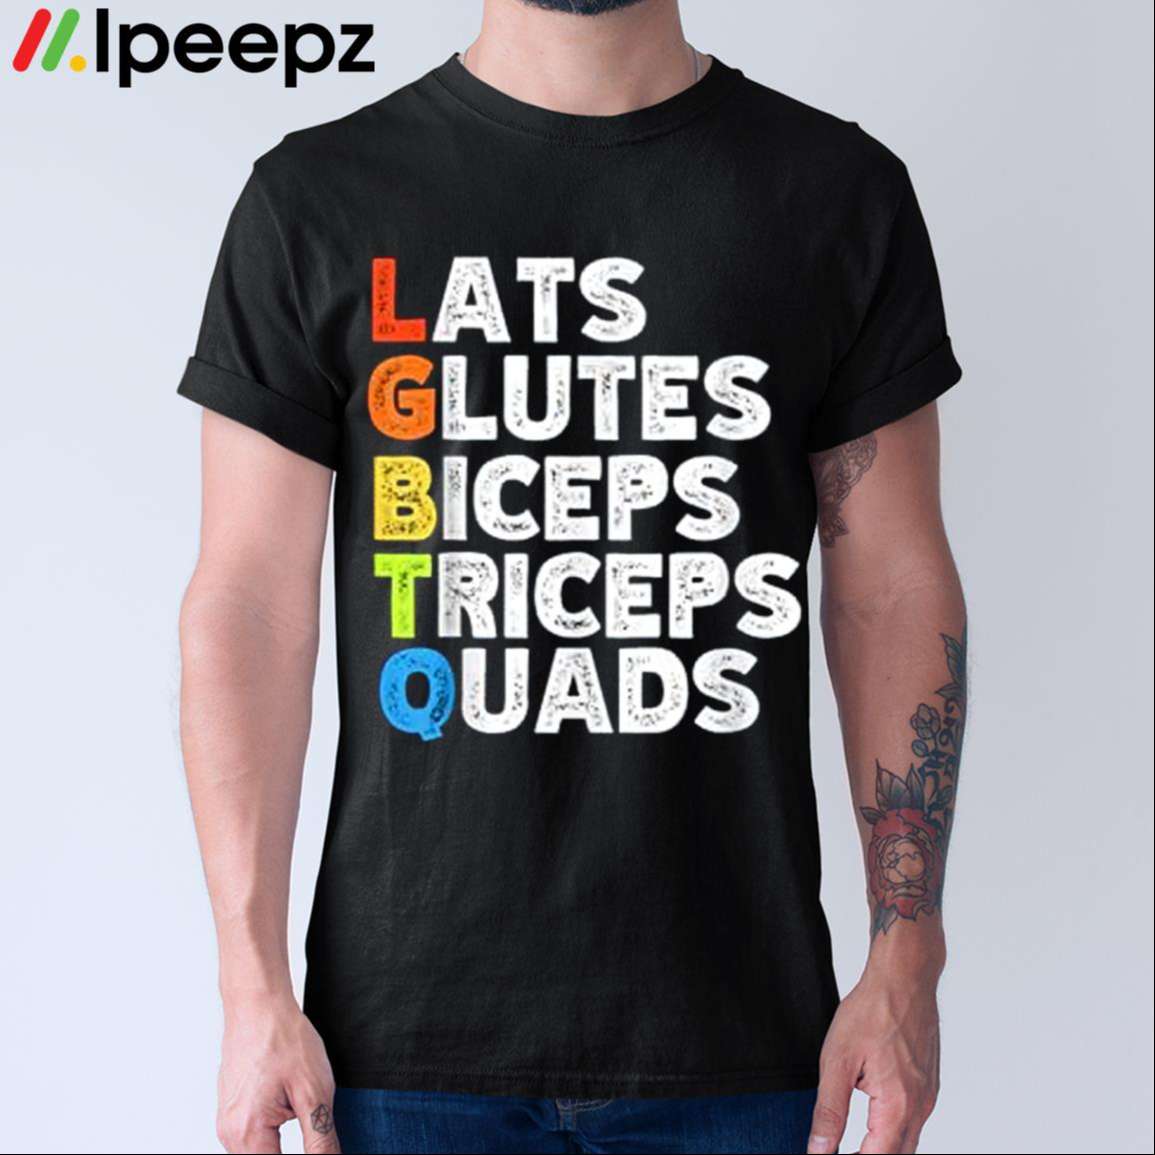 Lats Glutes Biceps Triceps Quads Shirt